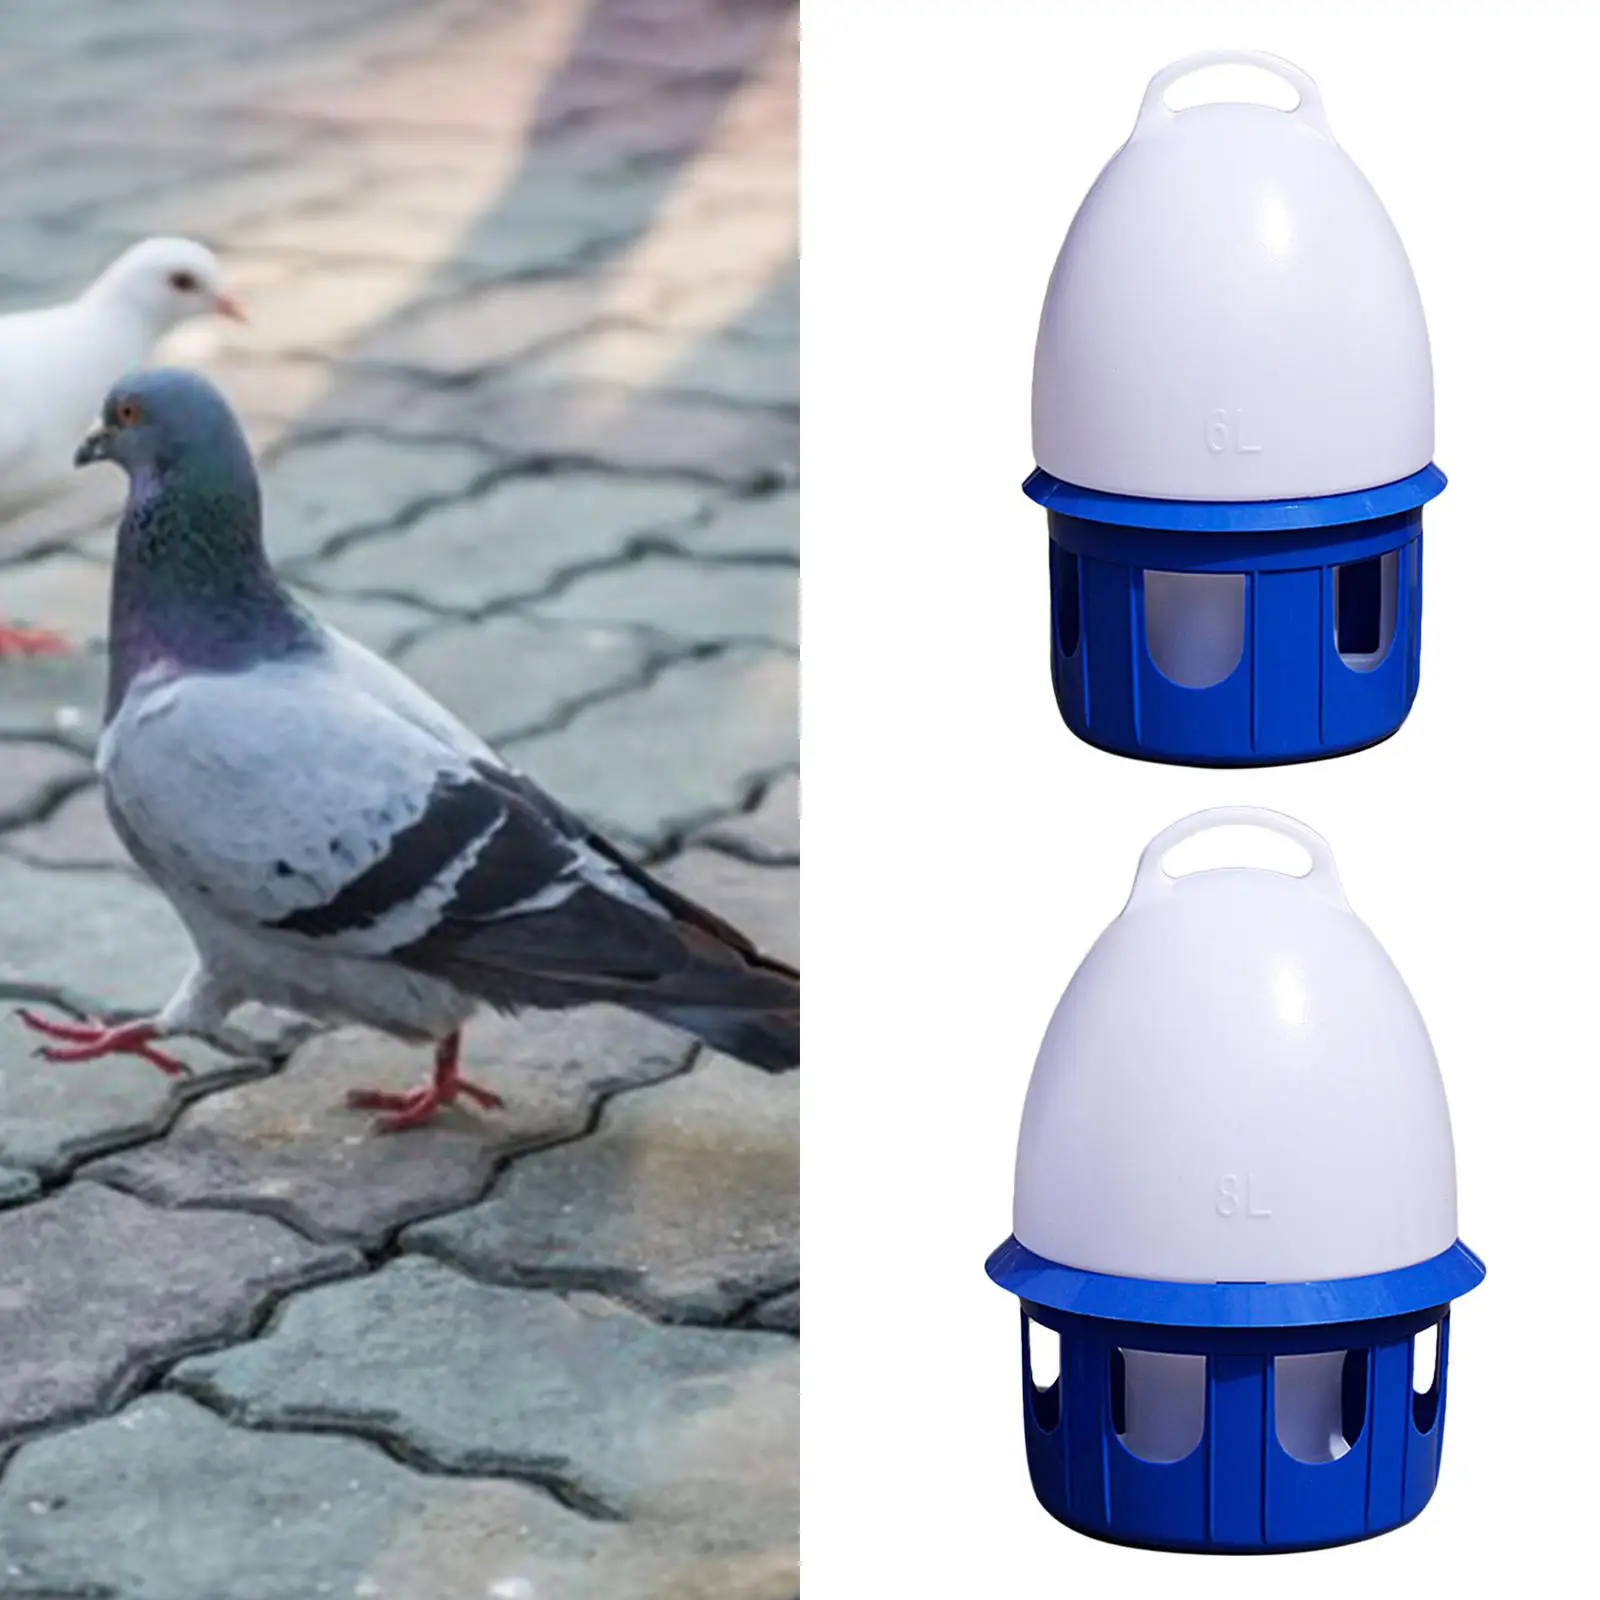 Pigeon Waterer Drinker Feeder Automatic Bird Water Dispenser for Parrot Dove